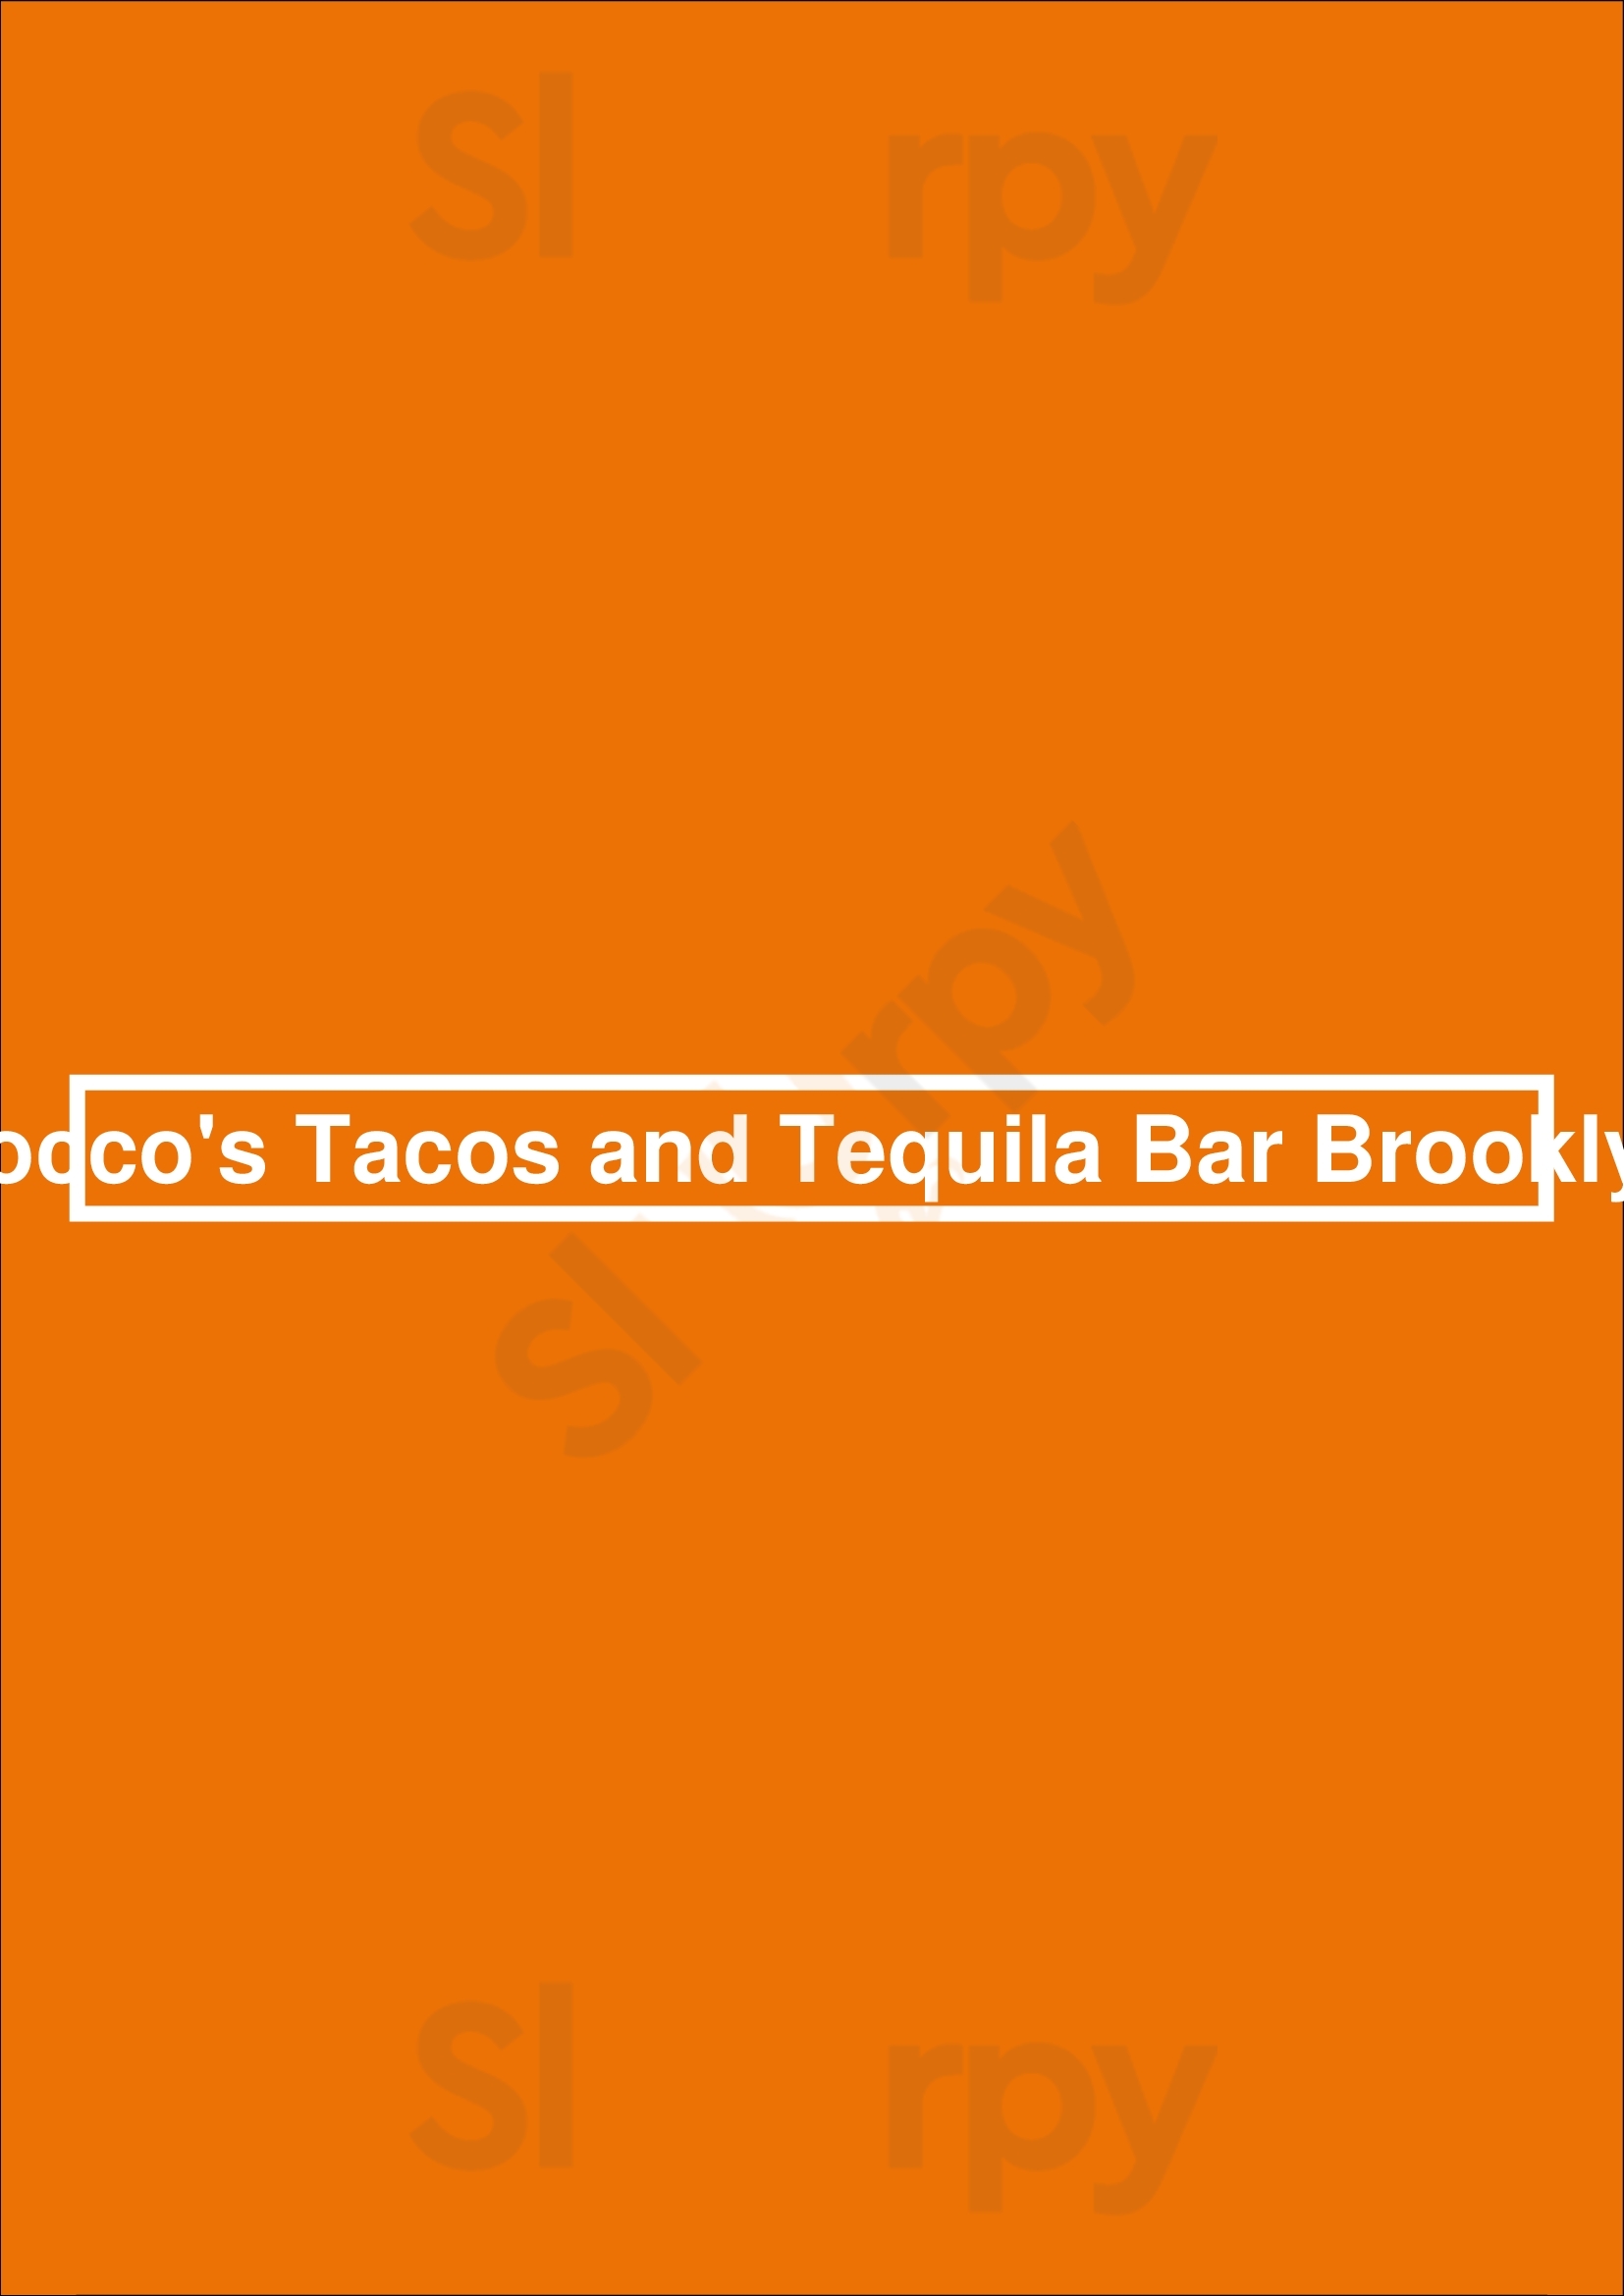 Rocco's Tacos And Tequila Bar Brooklyn Brooklyn Menu - 1